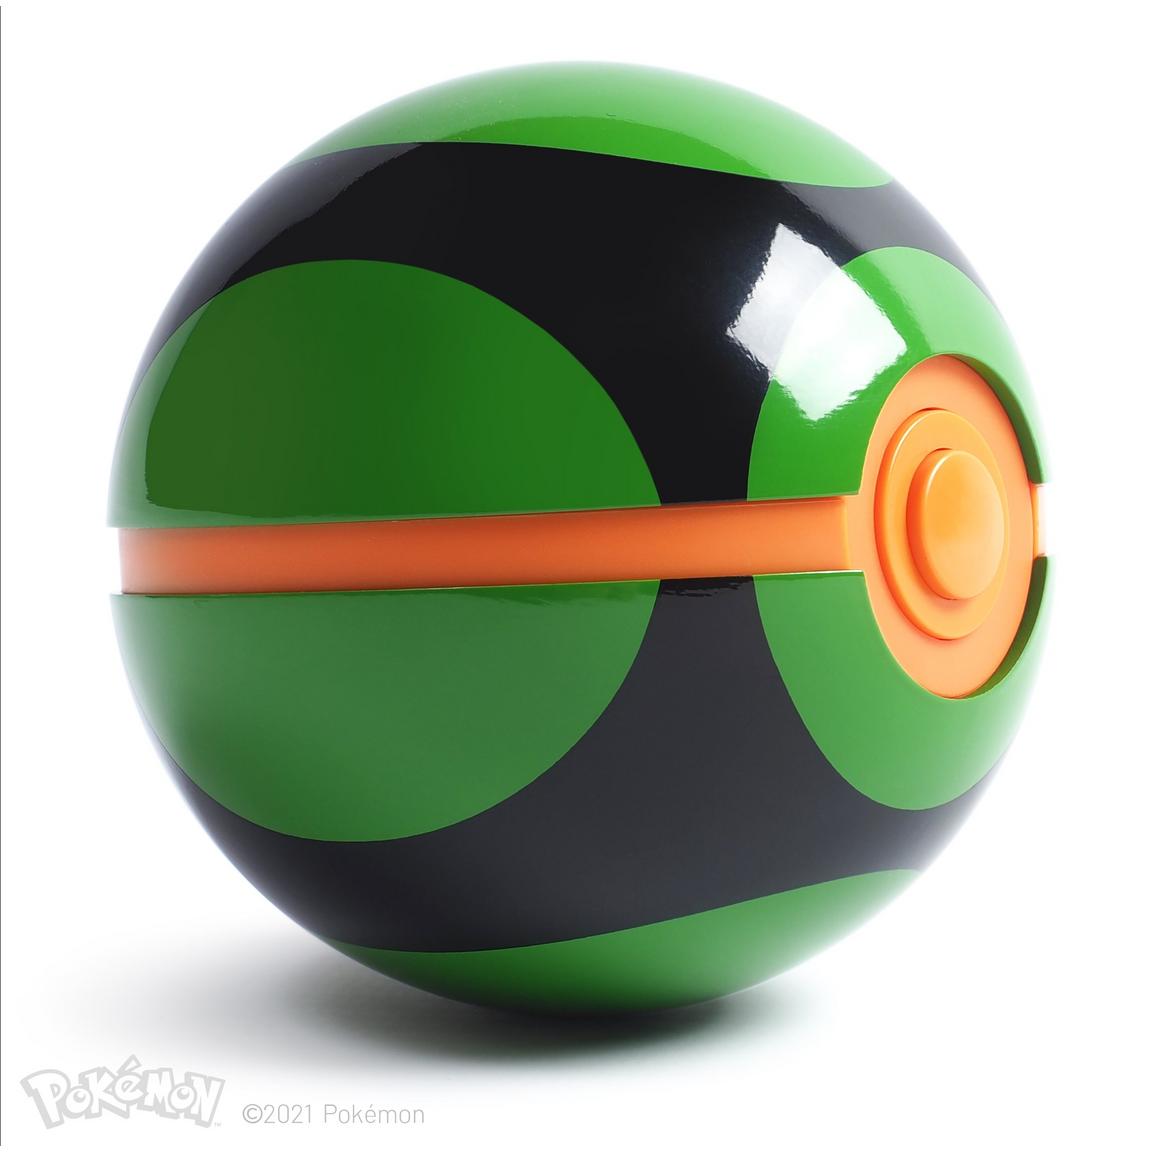 Official Pokémon© Die-Cast Collectible Dusk Ball Replica